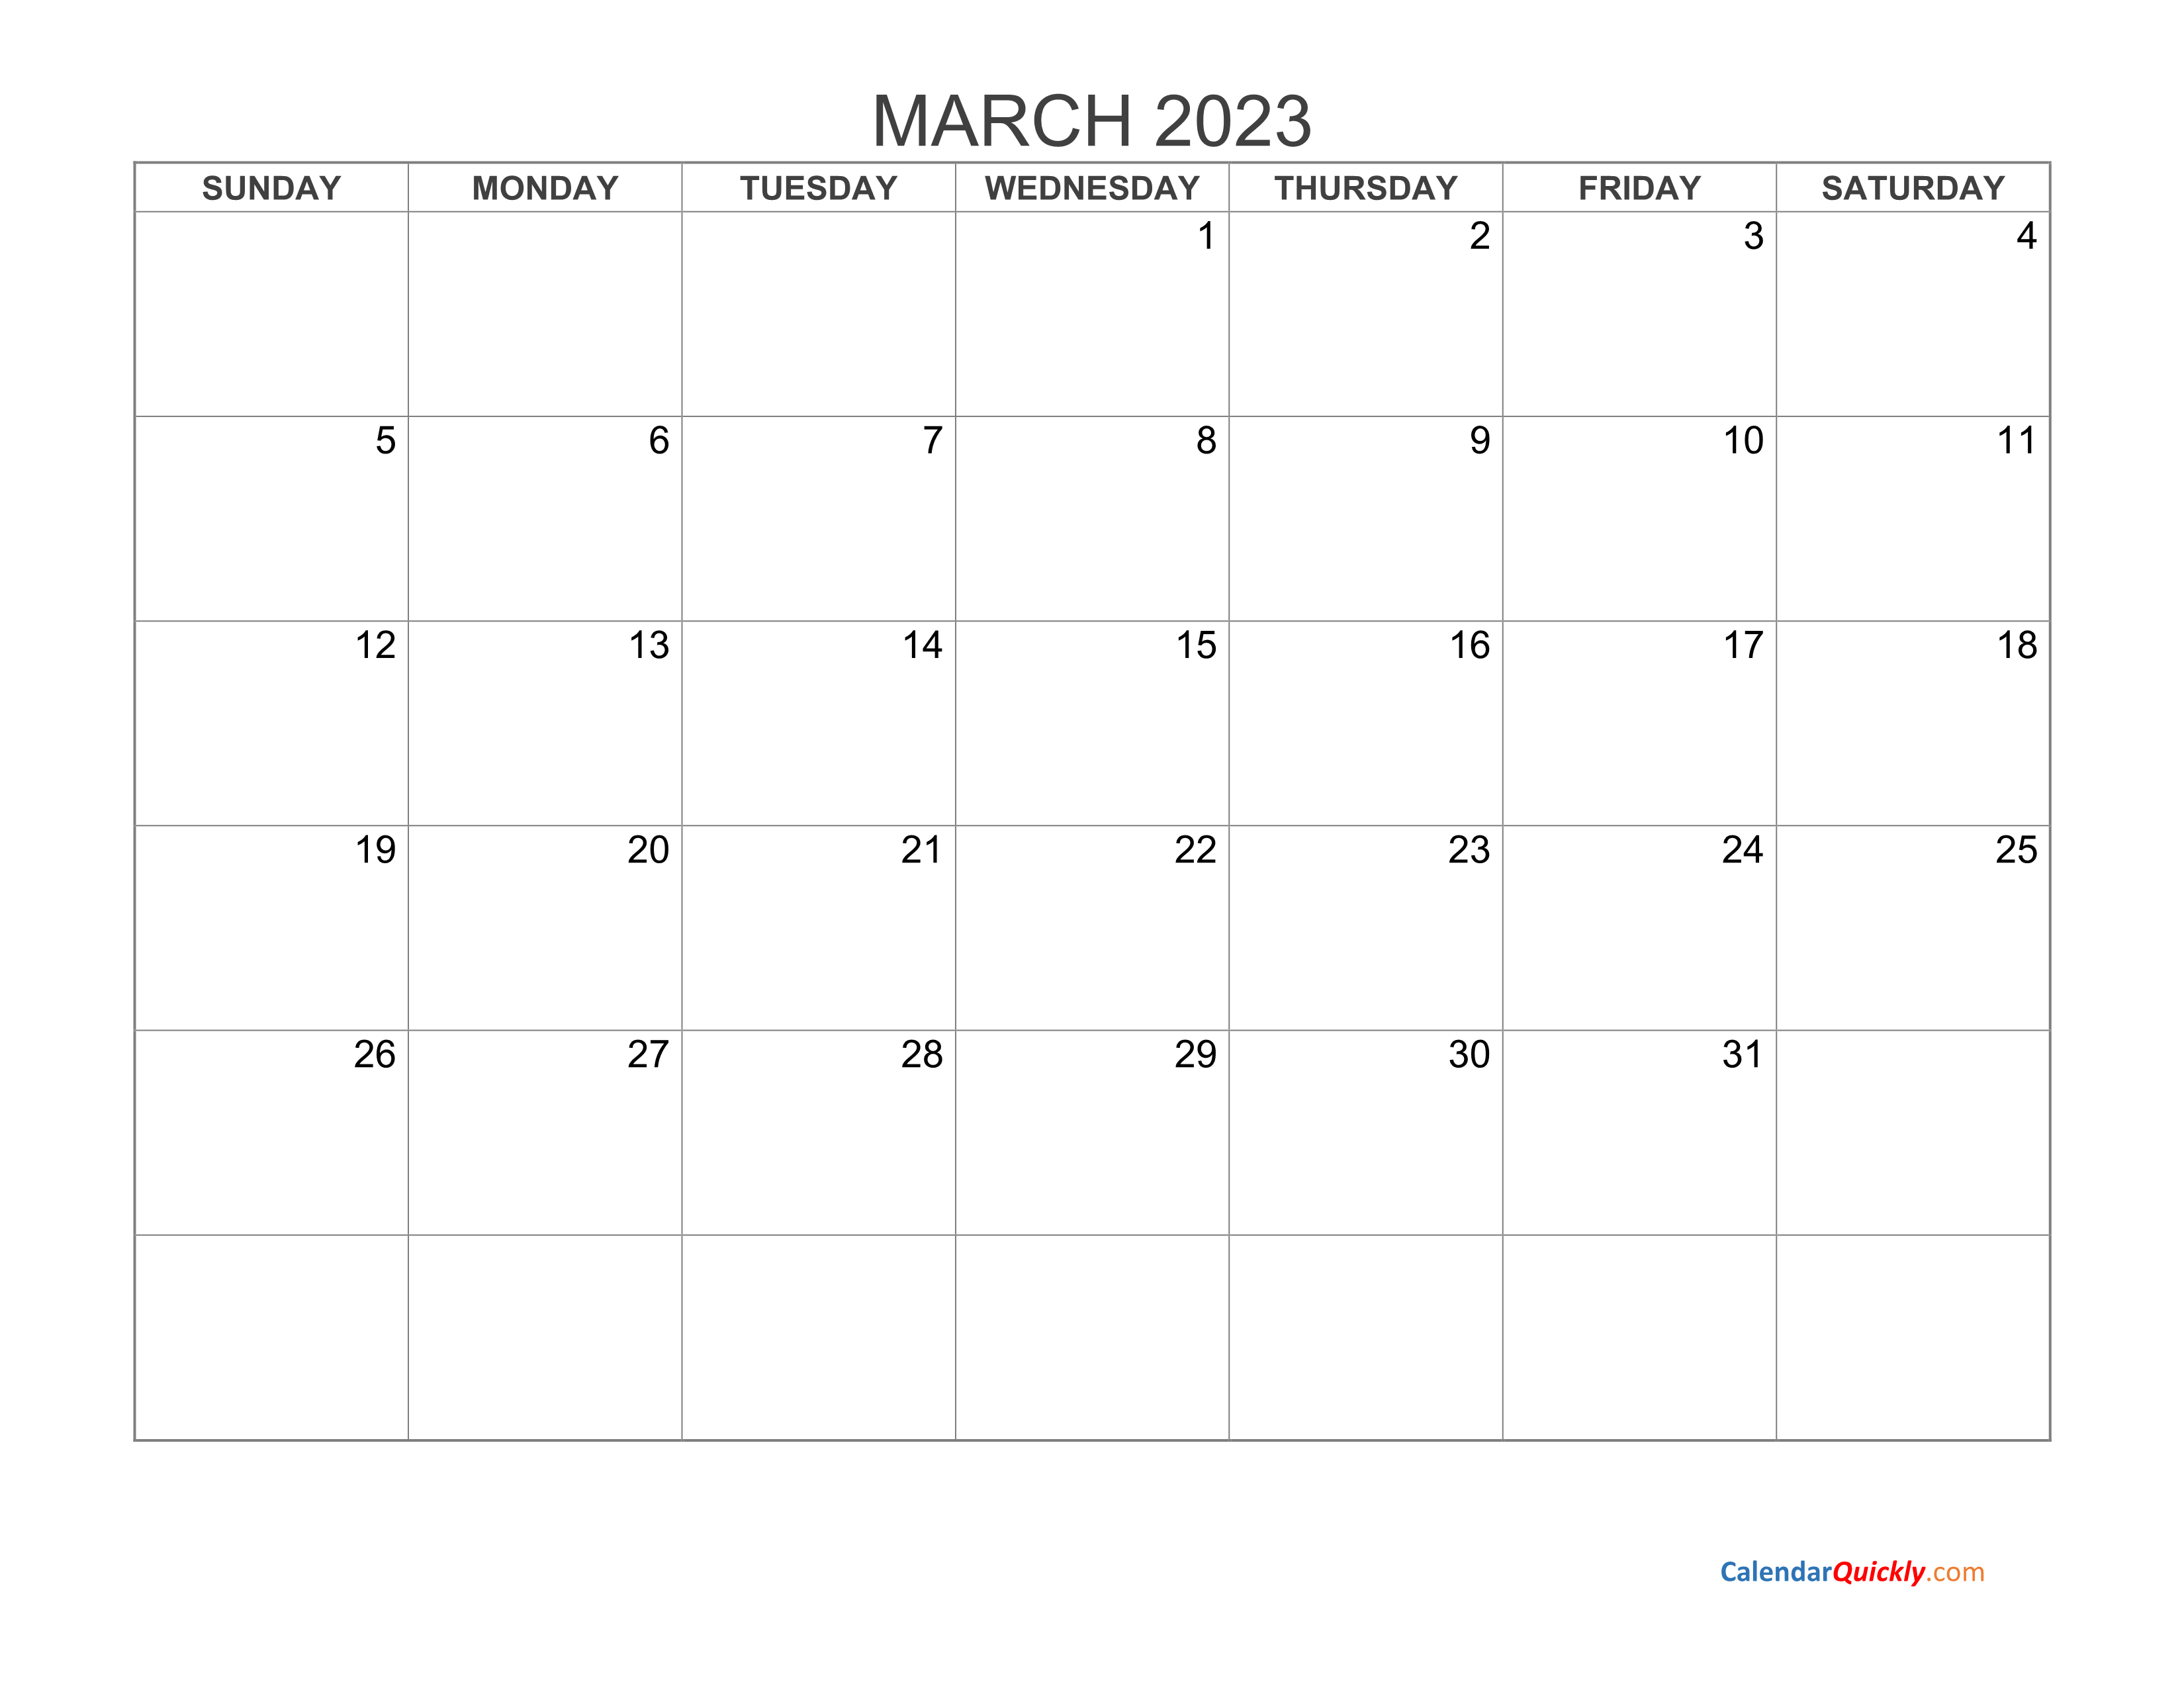 March 2023 Blank Calendar | Calendar Quickly